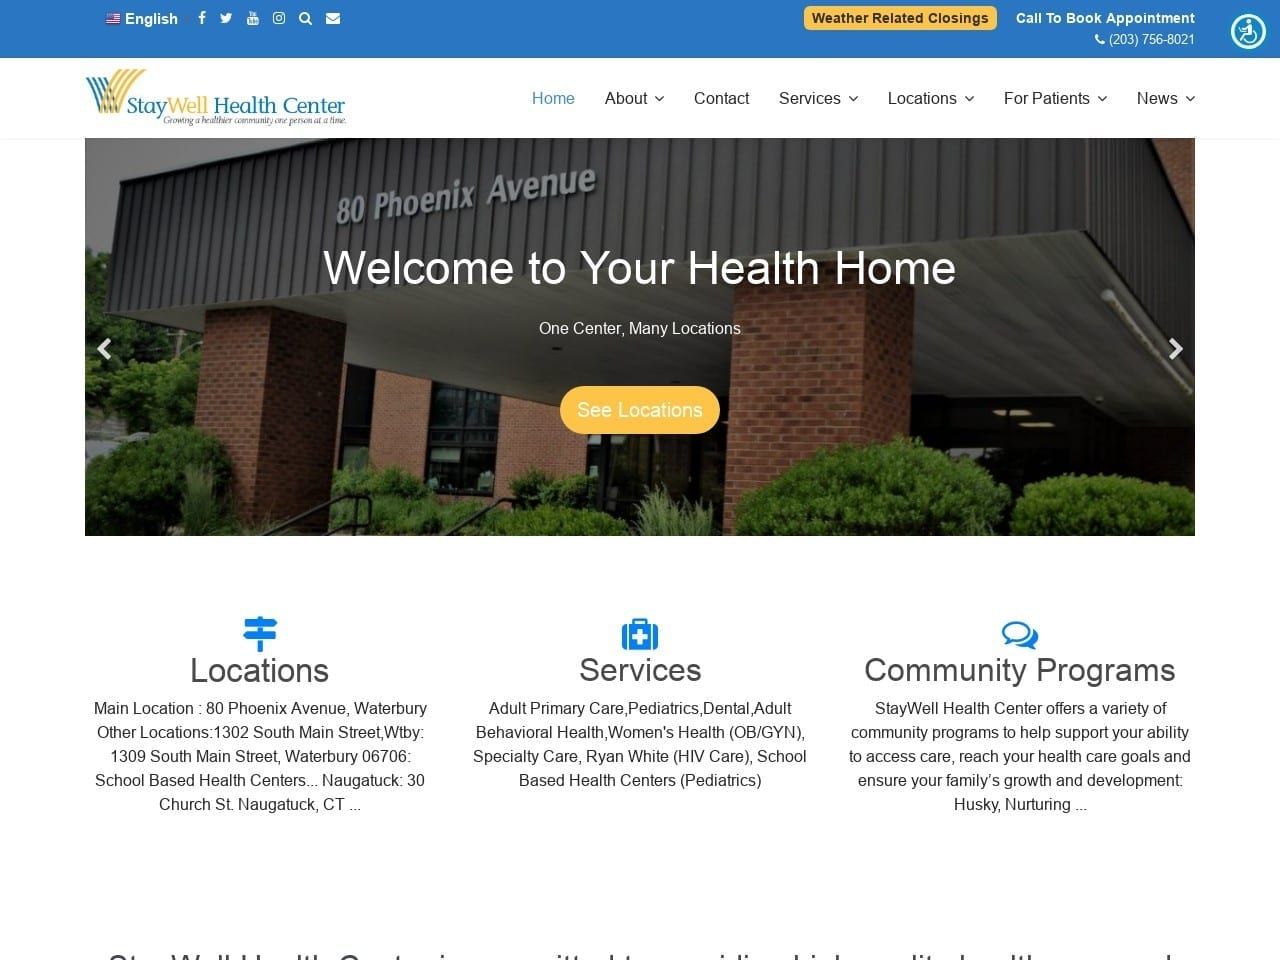 Staywell Health Center Website Screenshot from staywellhealth.org